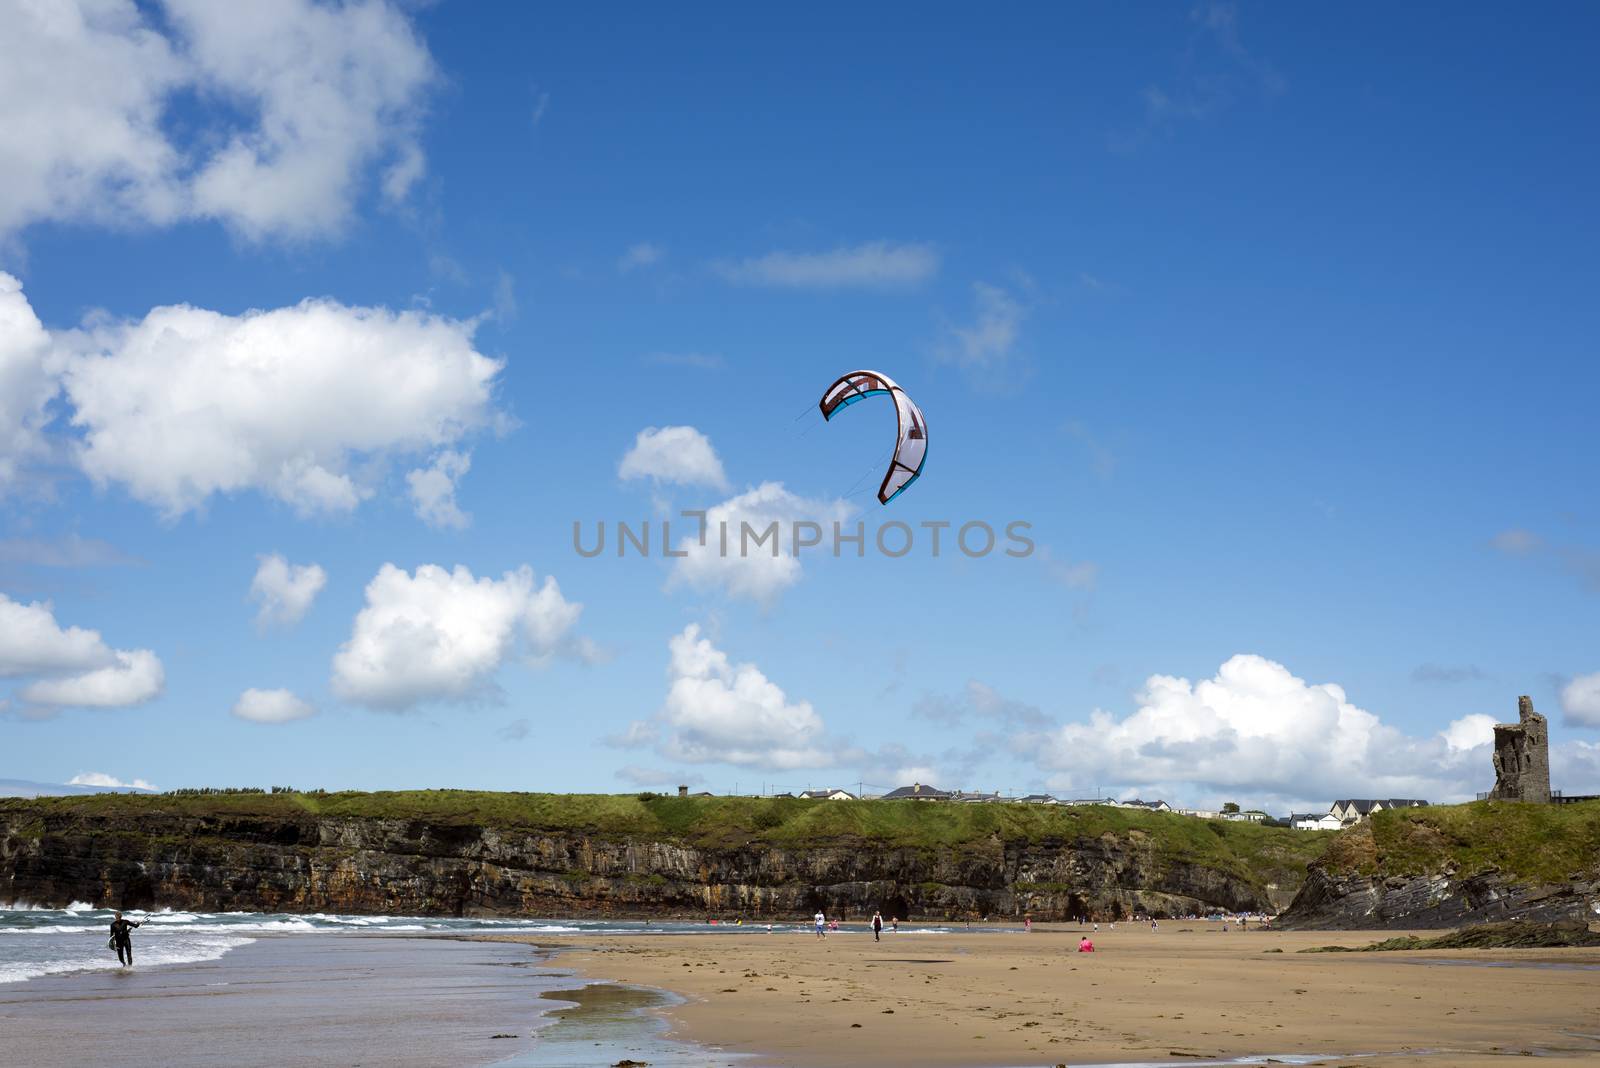 lone kite surfer getting ready at ballybunion beach on the wild atlantic way